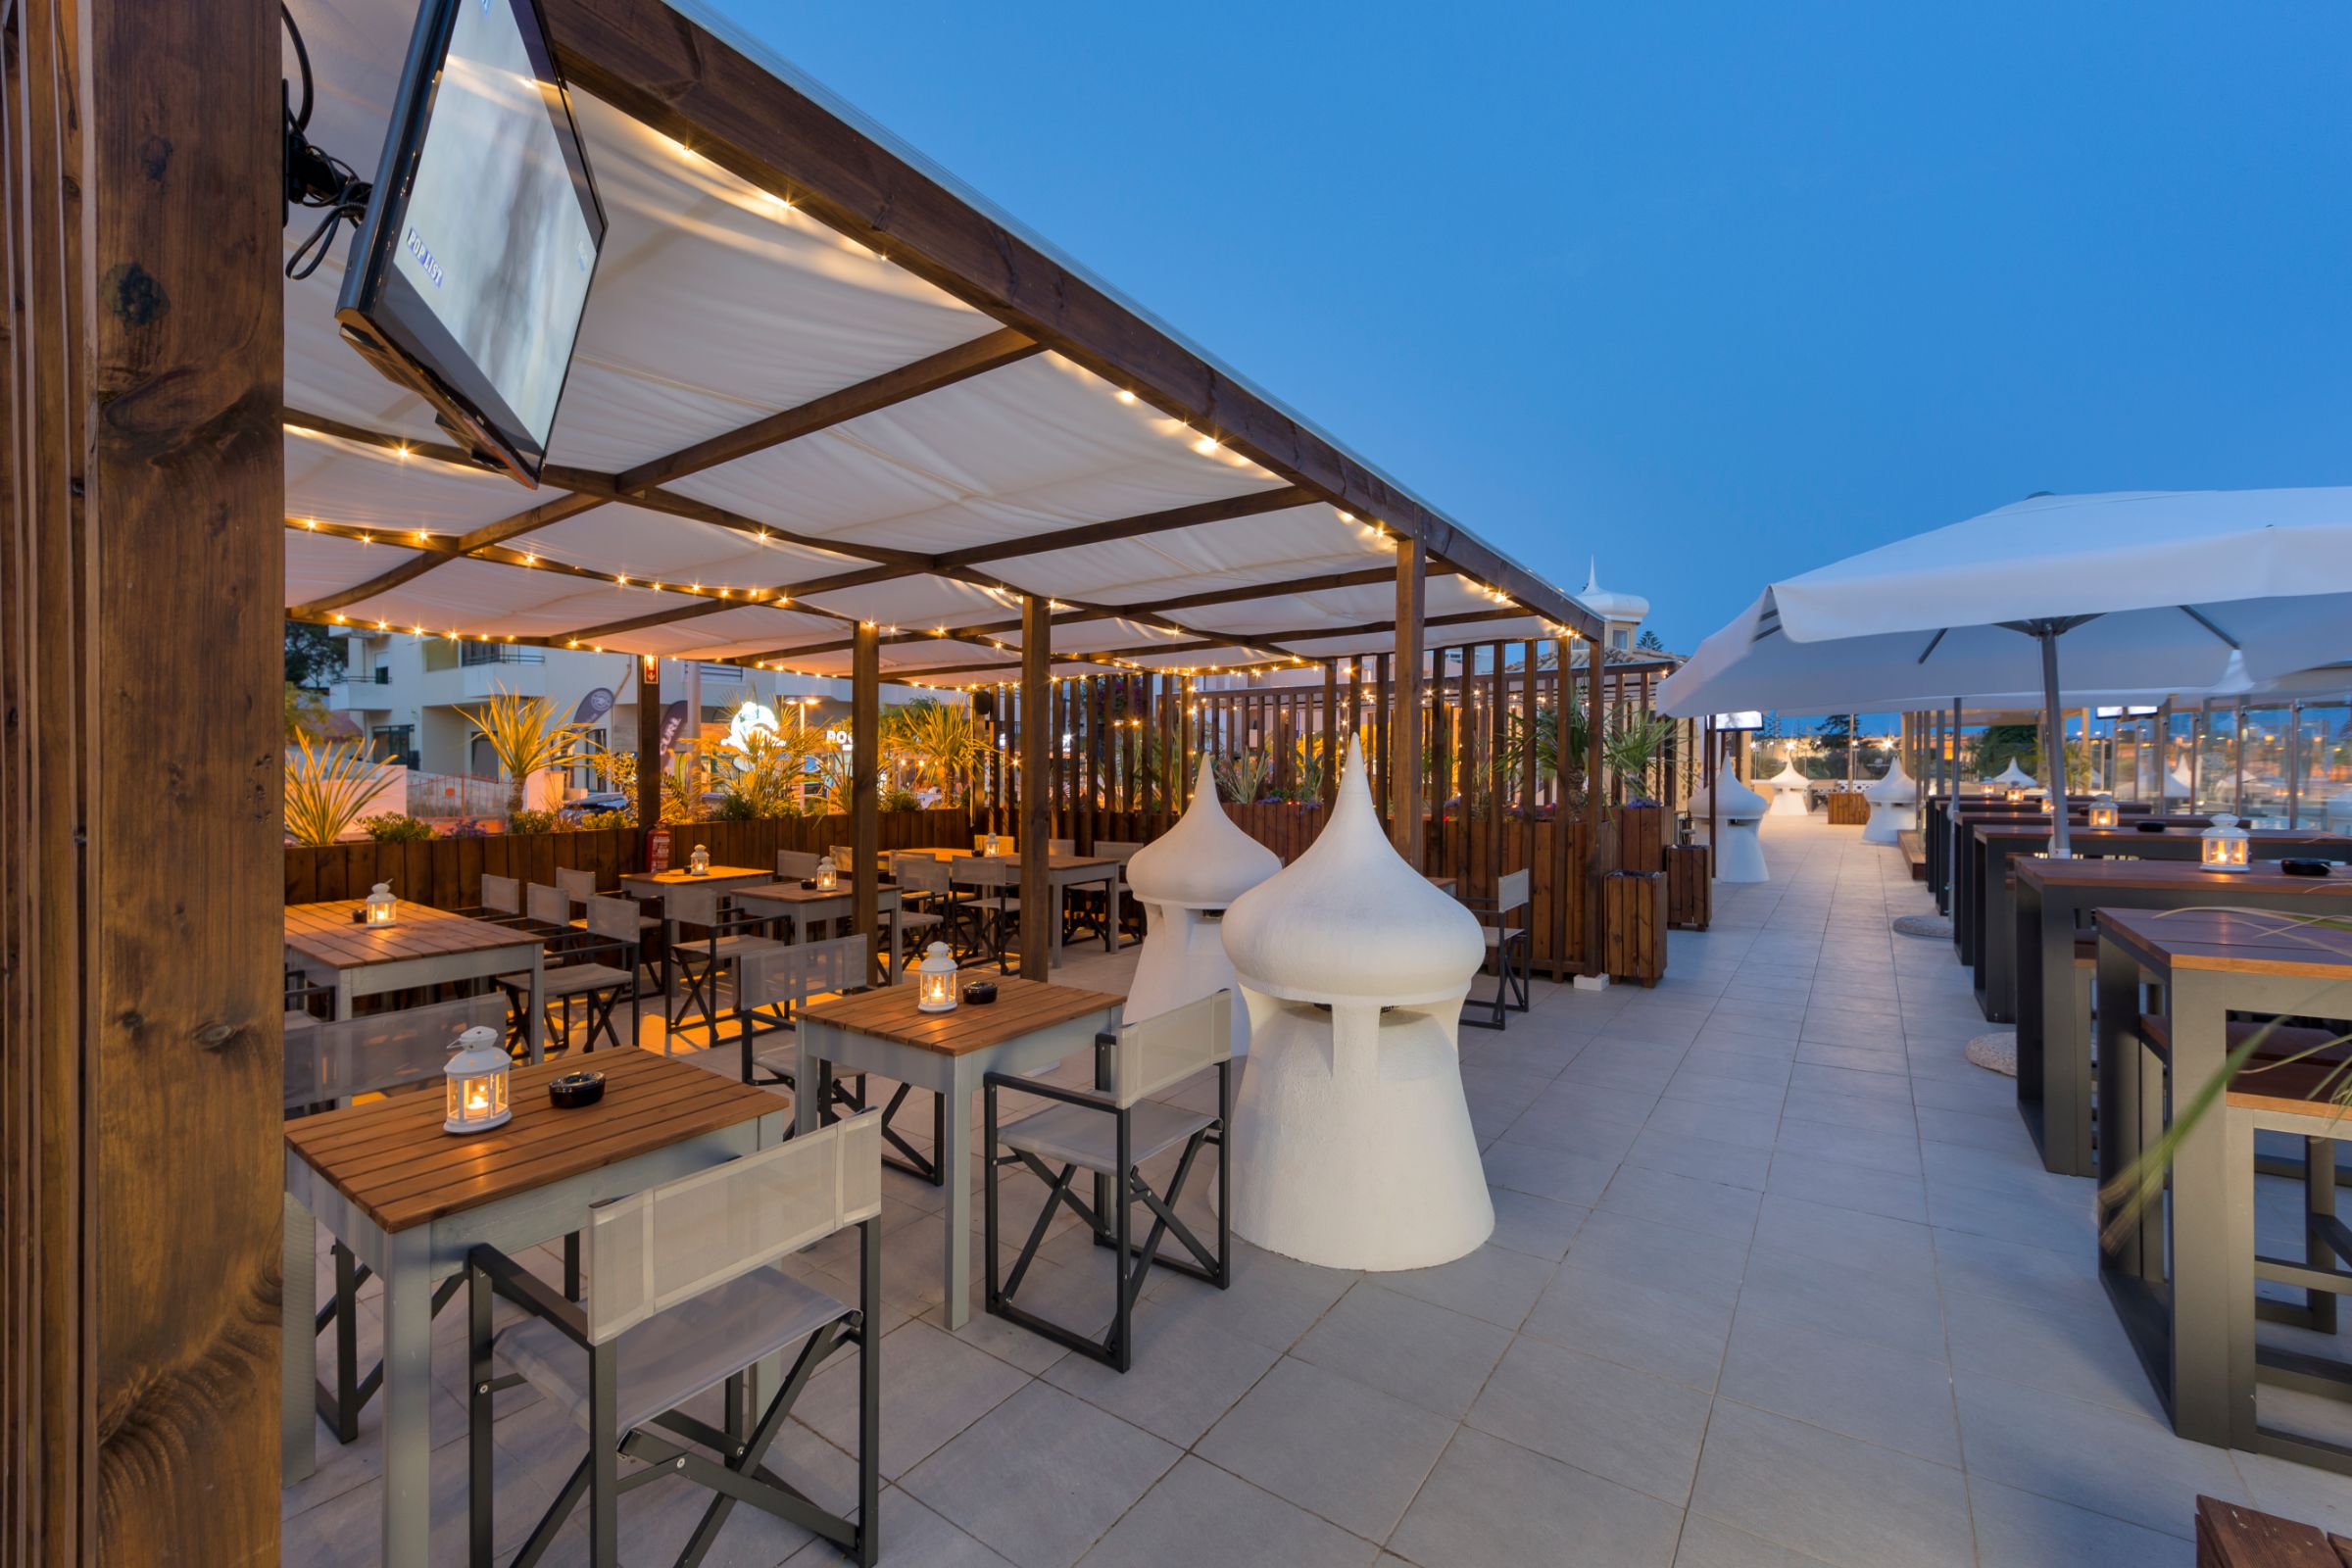 Mandala Lounge Hotel Oriental - P3P J. Paulo Pereira - Arquitetos & Associados